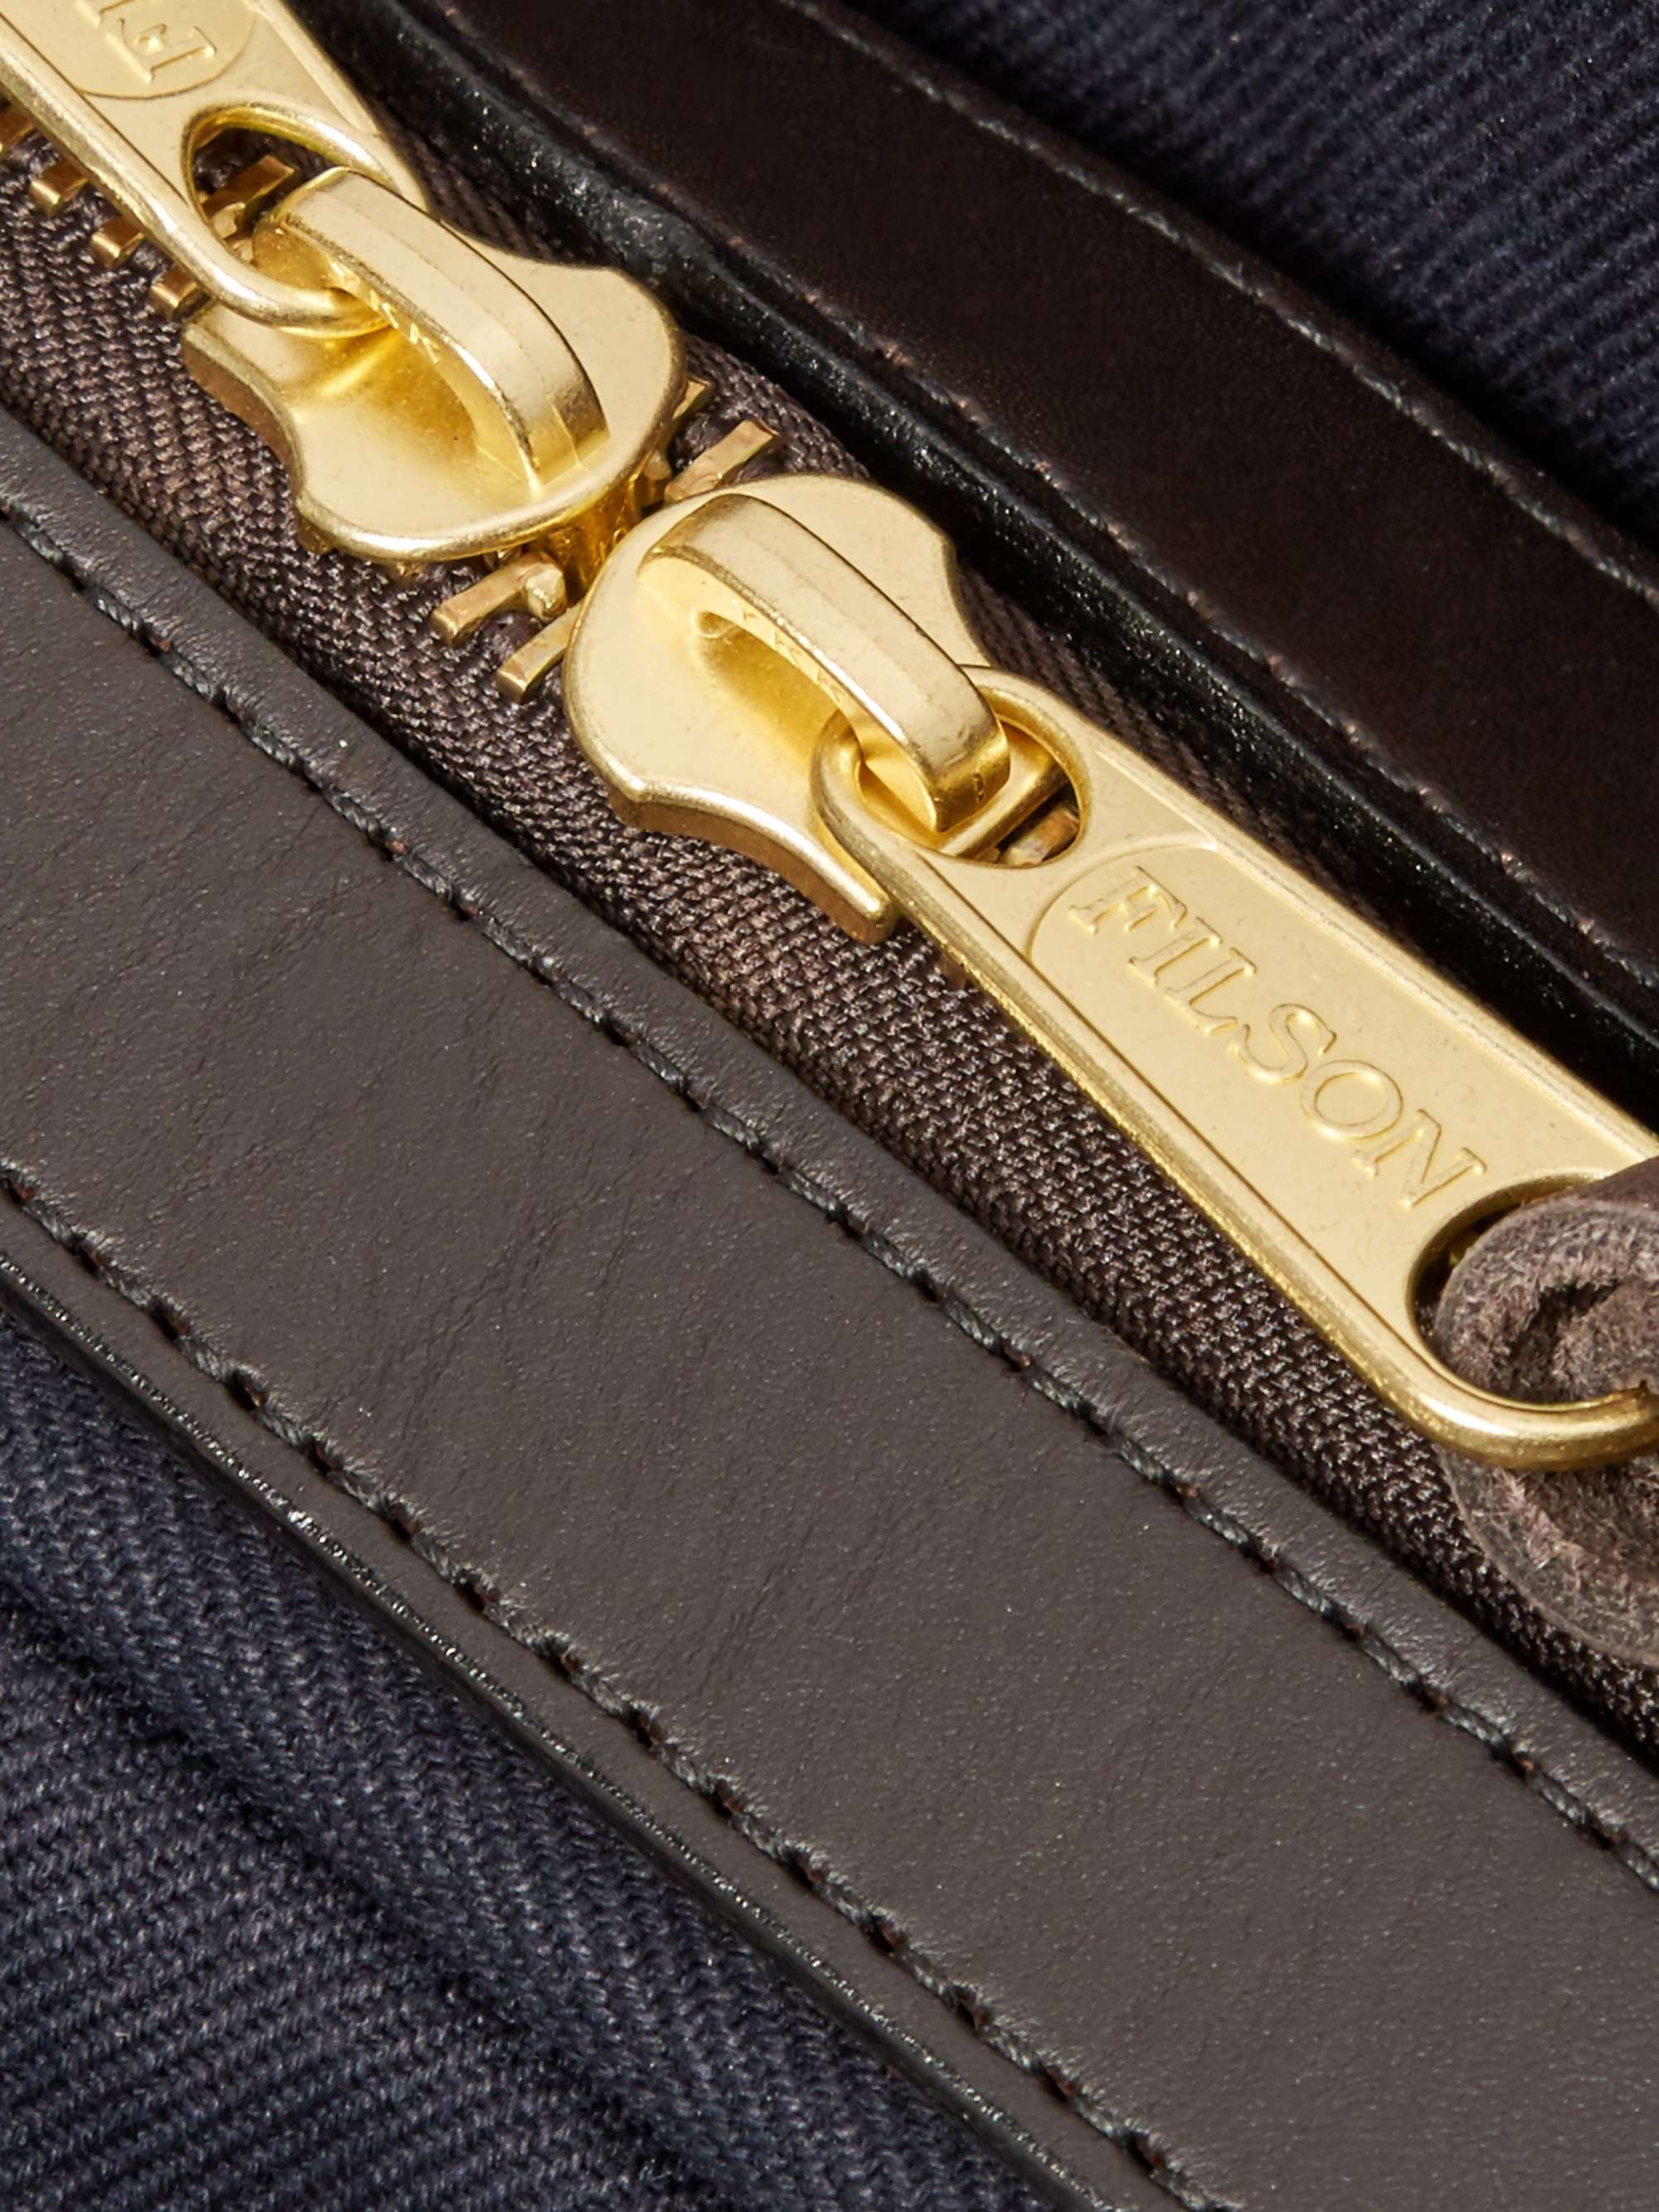 FILSON Original Leather-Trimmed Twill Briefcase